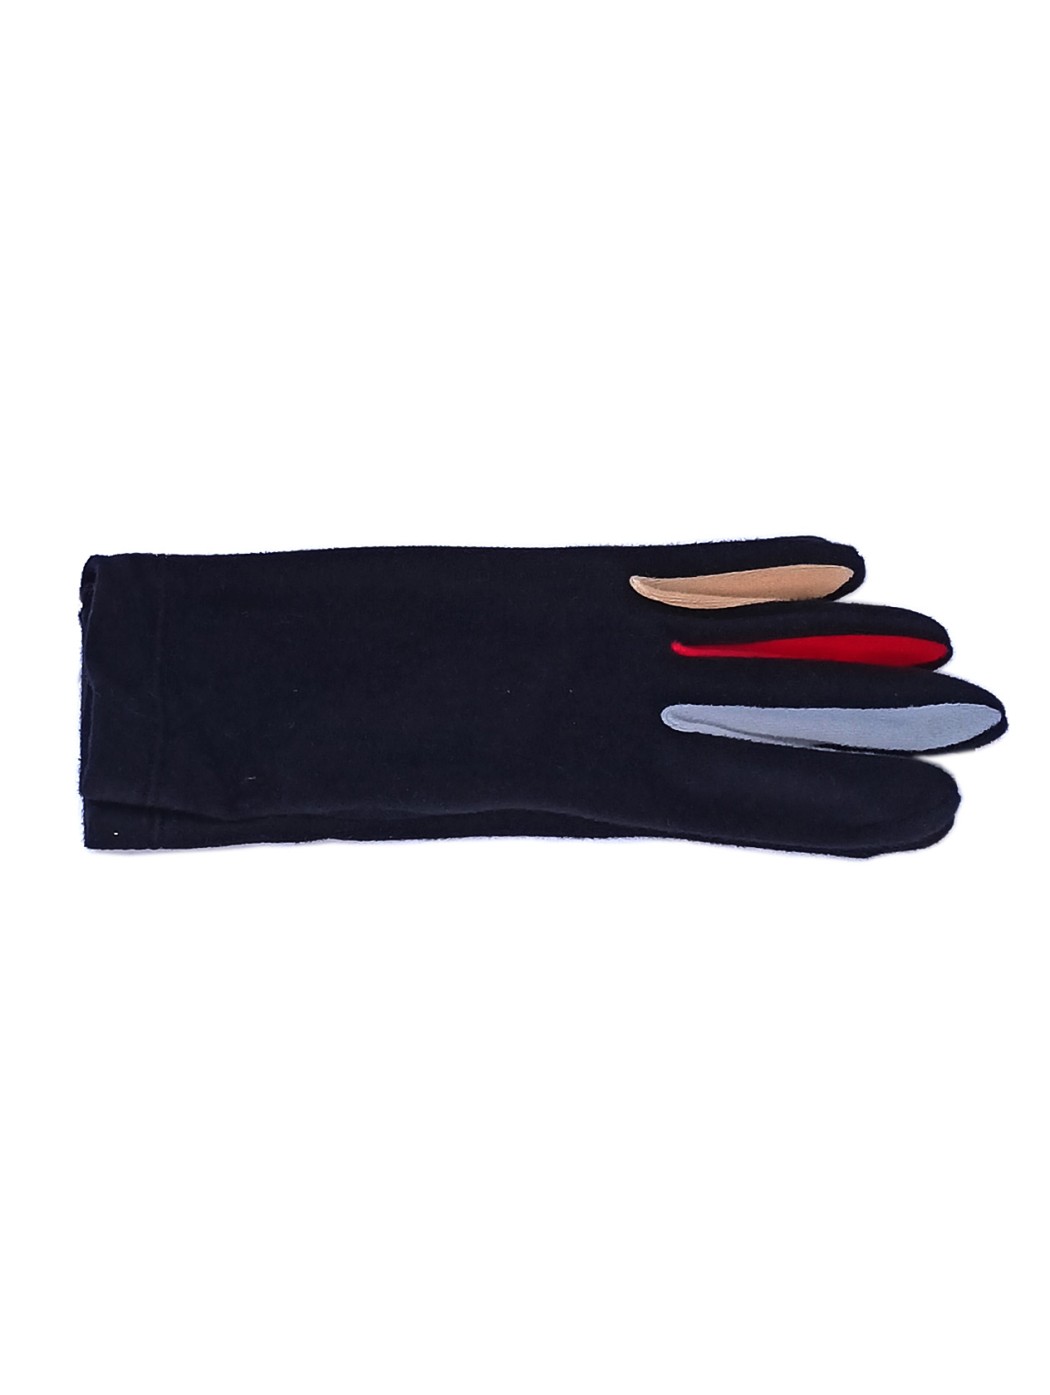 Black fashion pile gloves...